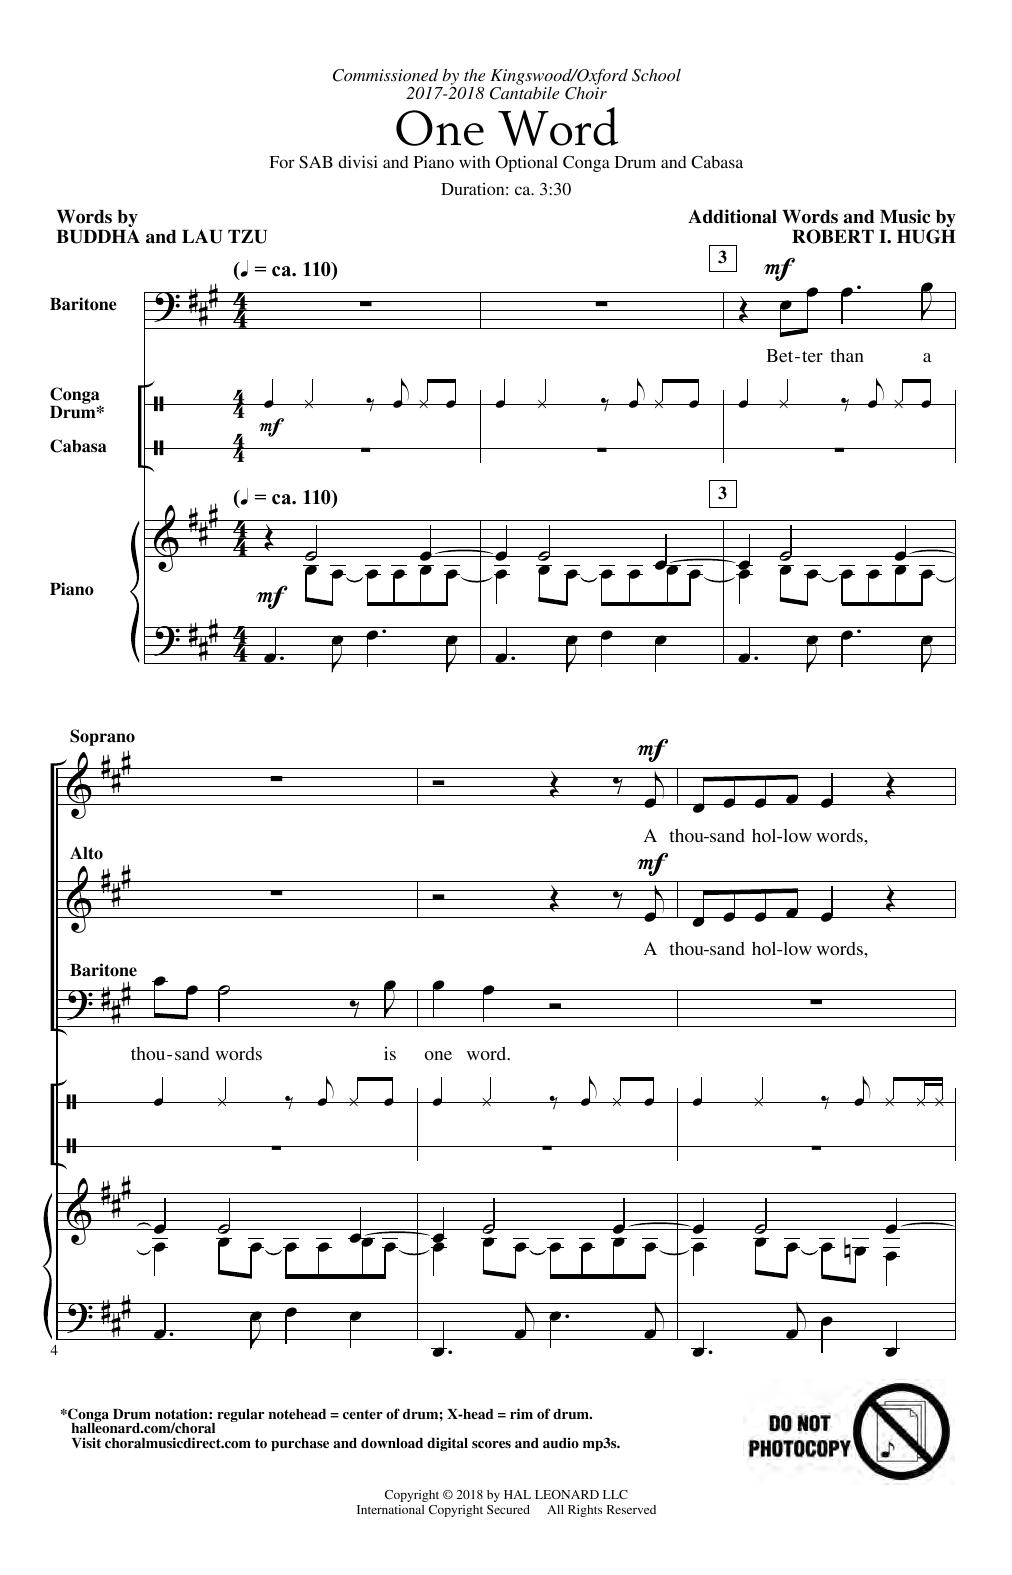 Robert I. Hugh One Word Sheet Music Notes & Chords for SAB Choir - Download or Print PDF